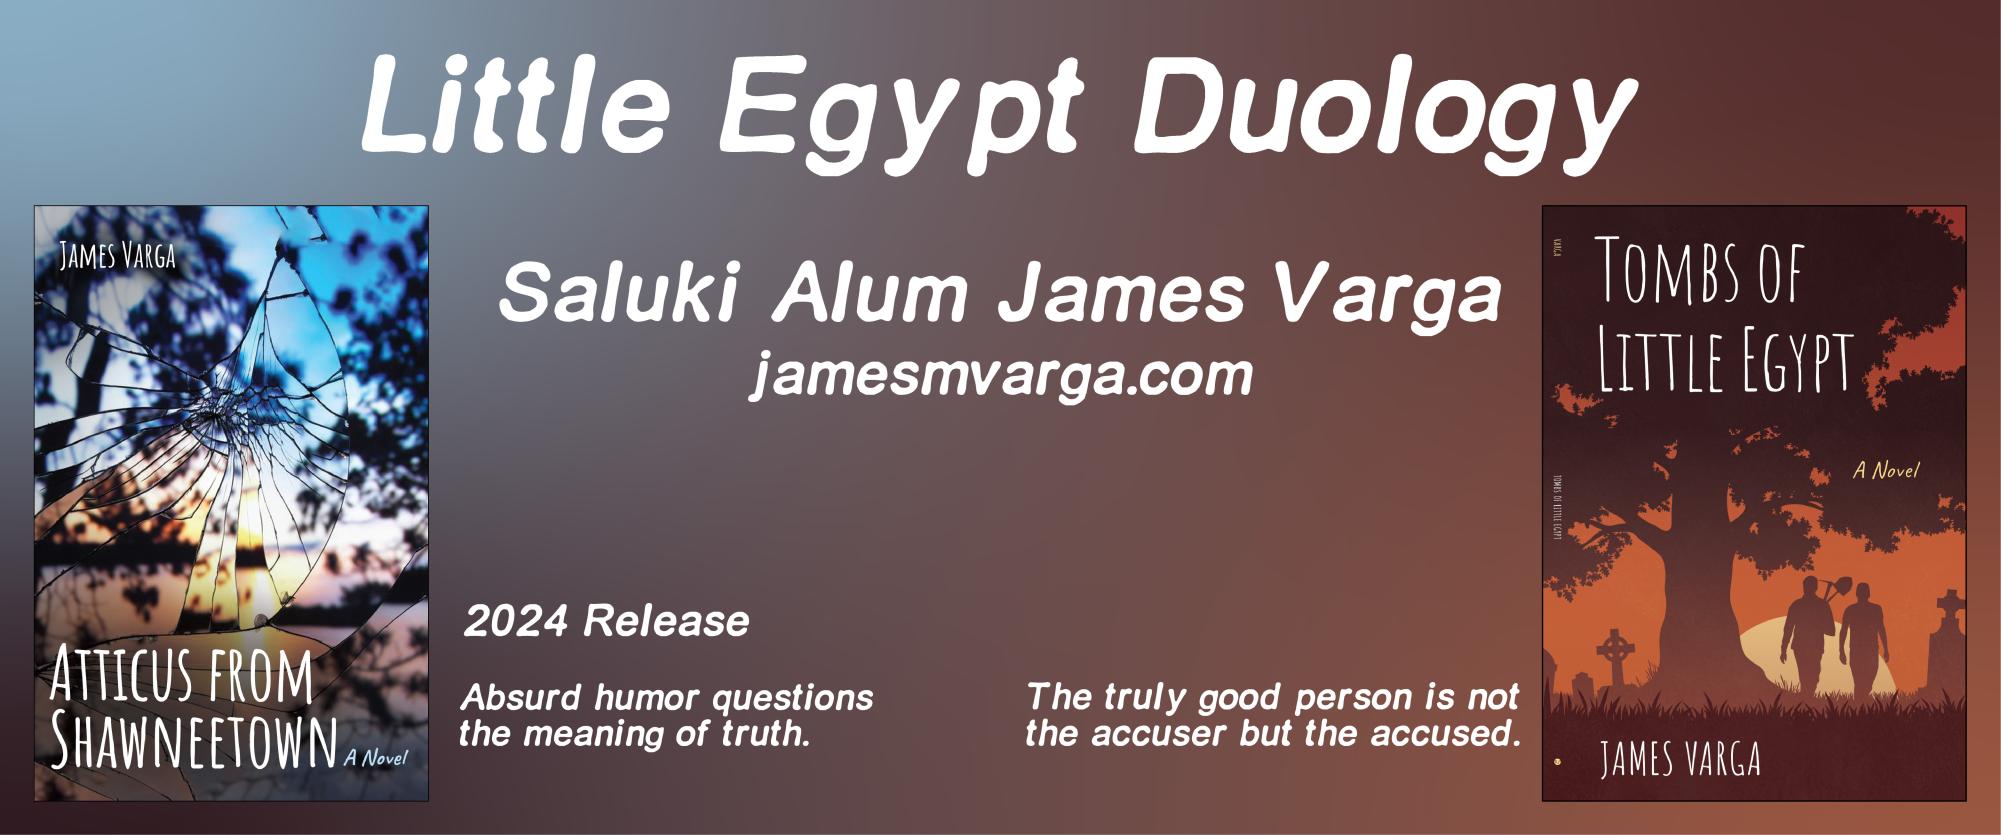 Little Egypt Duology